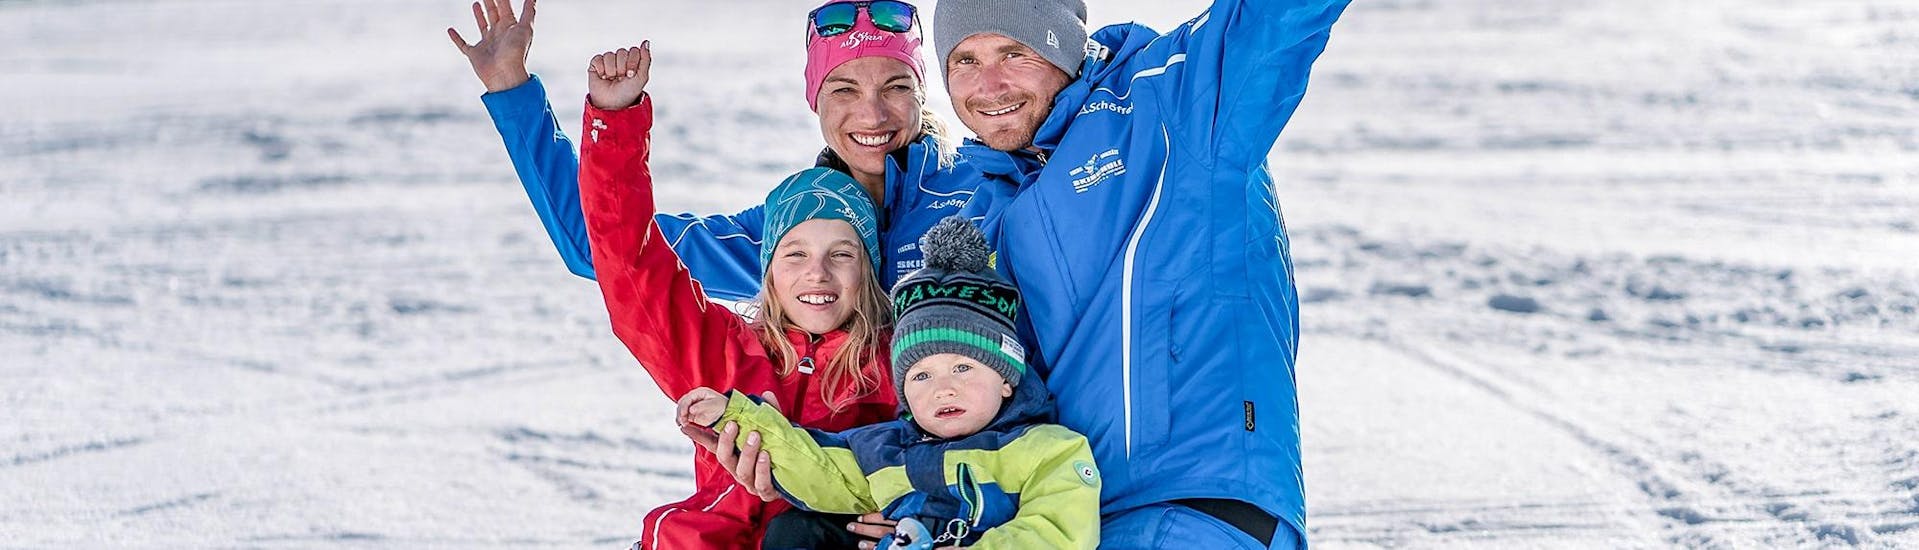 Privélessen skiën voor families - Alle niveaus.